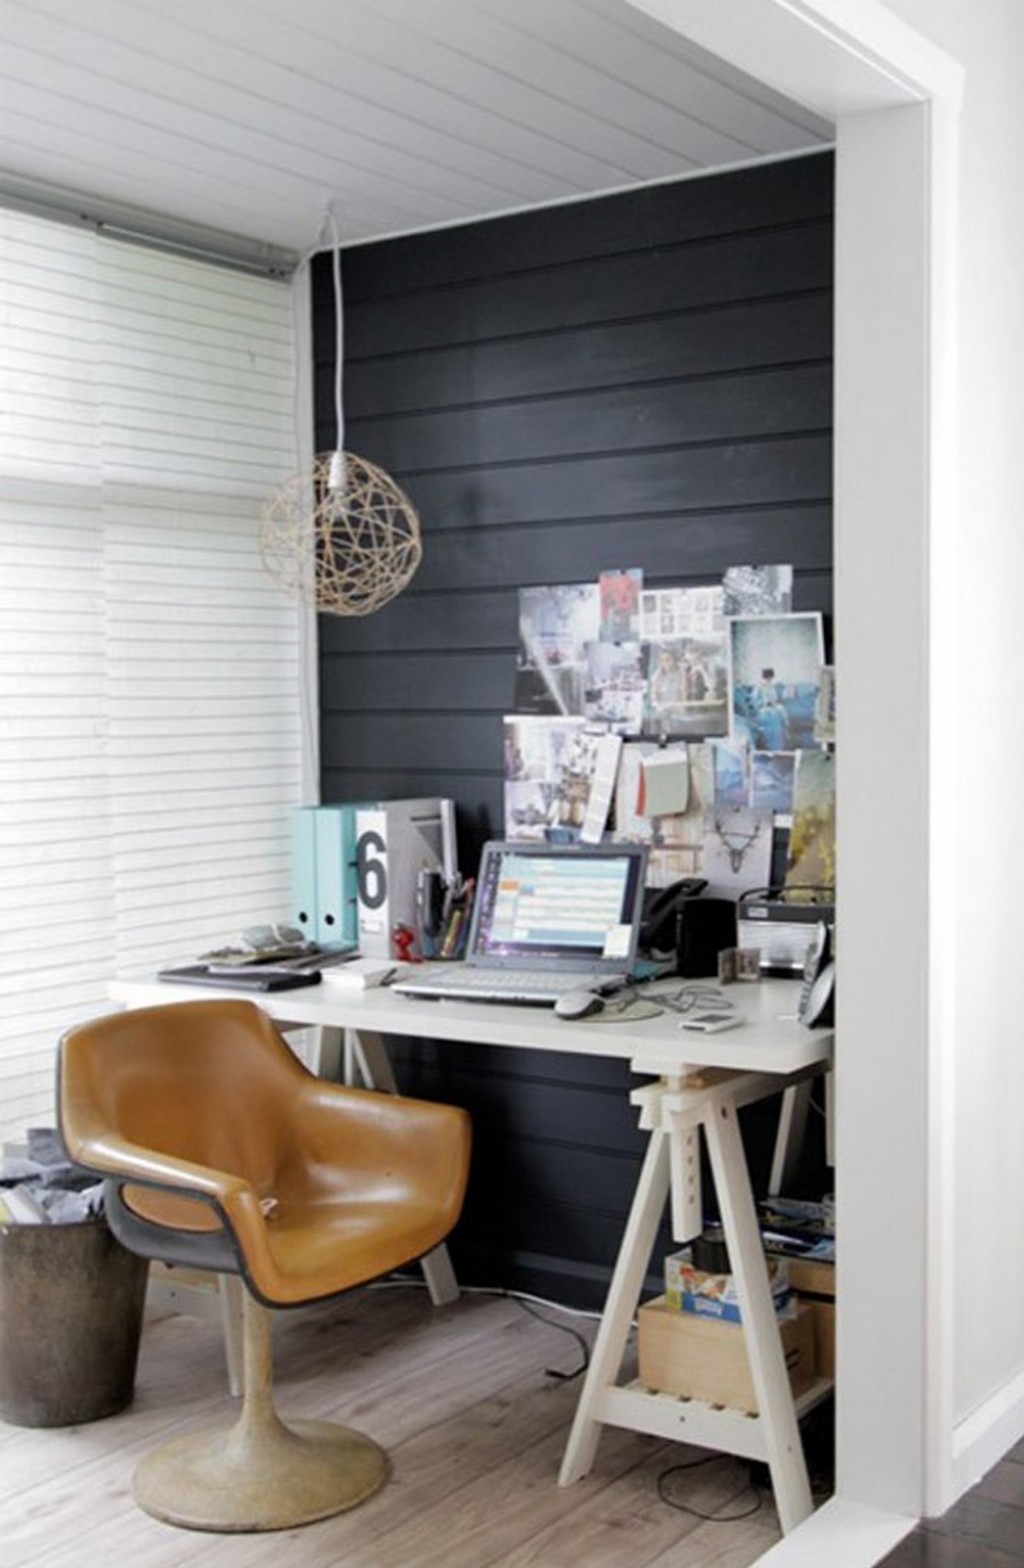 25 Modern Home Office Design Ideas - Decoration Love